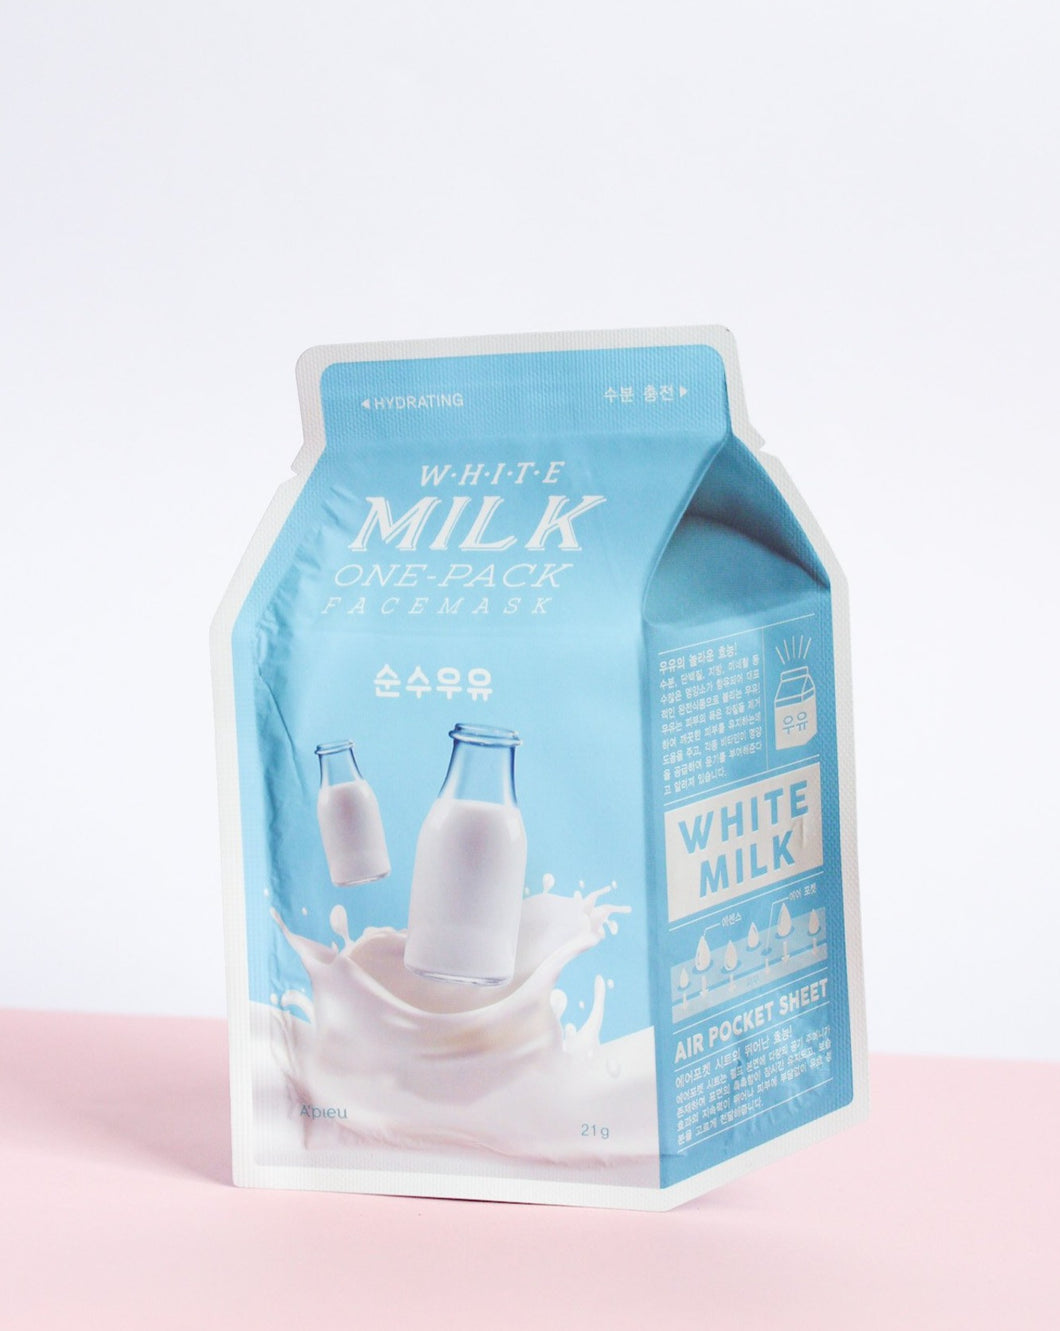 Milk One pack - White Milk